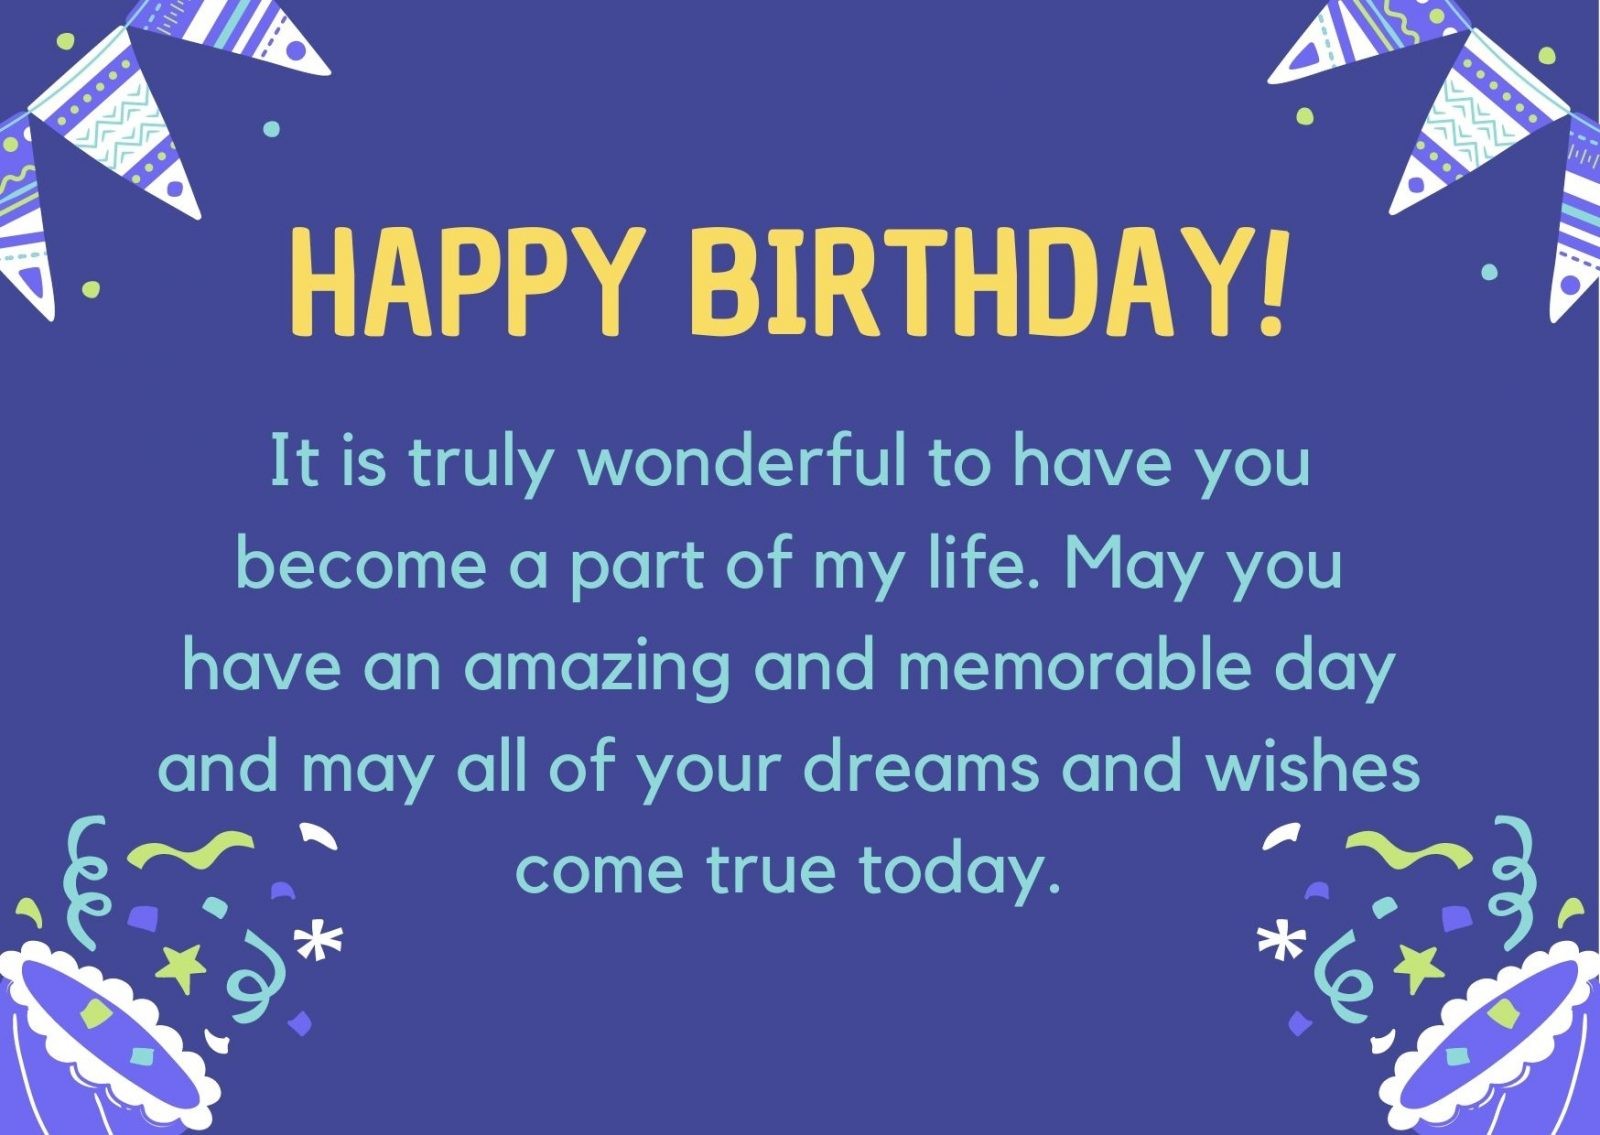 happy birthday message for a friend boy 